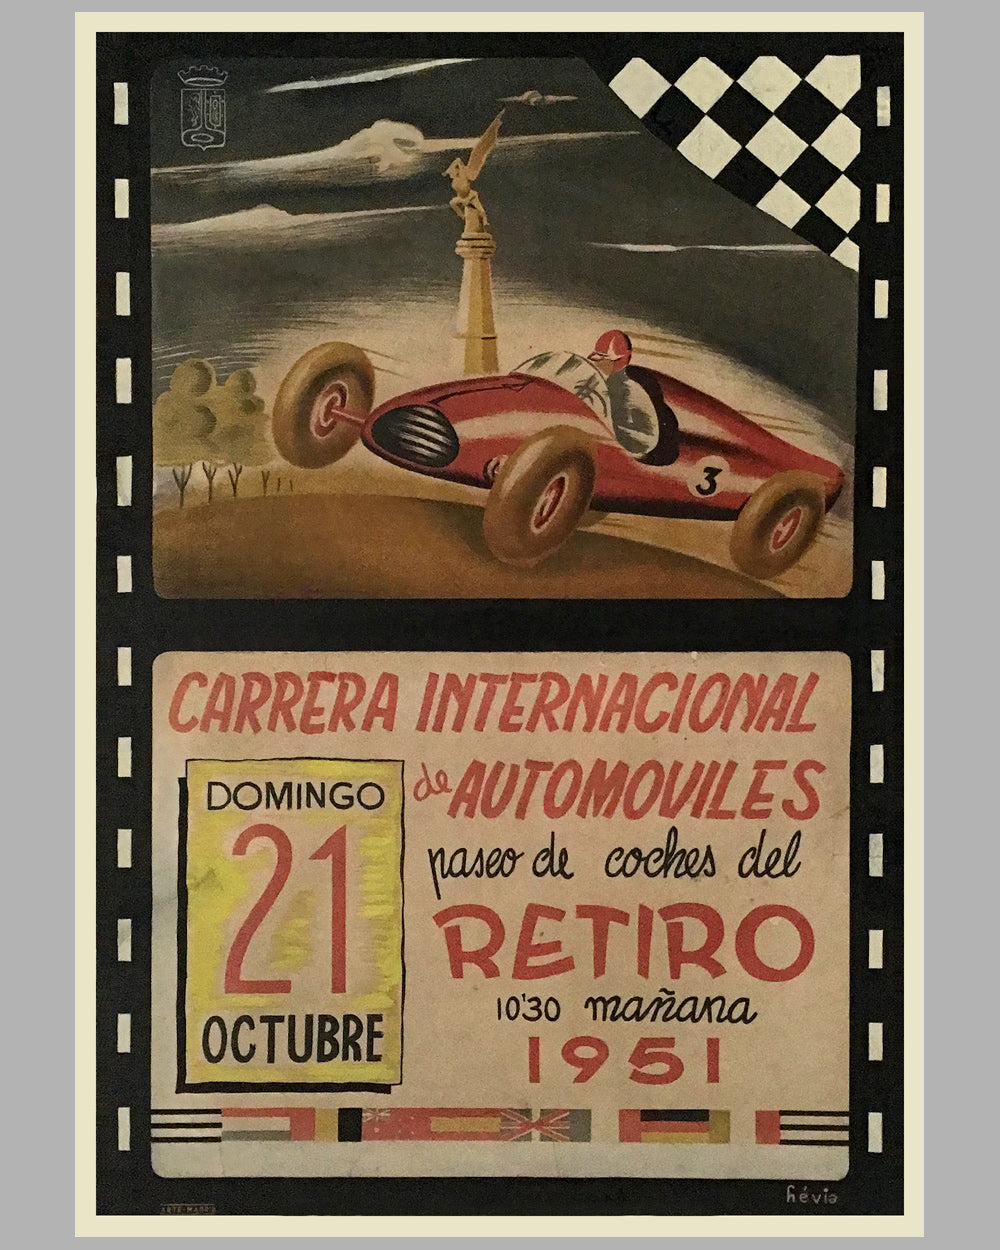 1951 Carrera International de Automoviles in Madrid original event poster